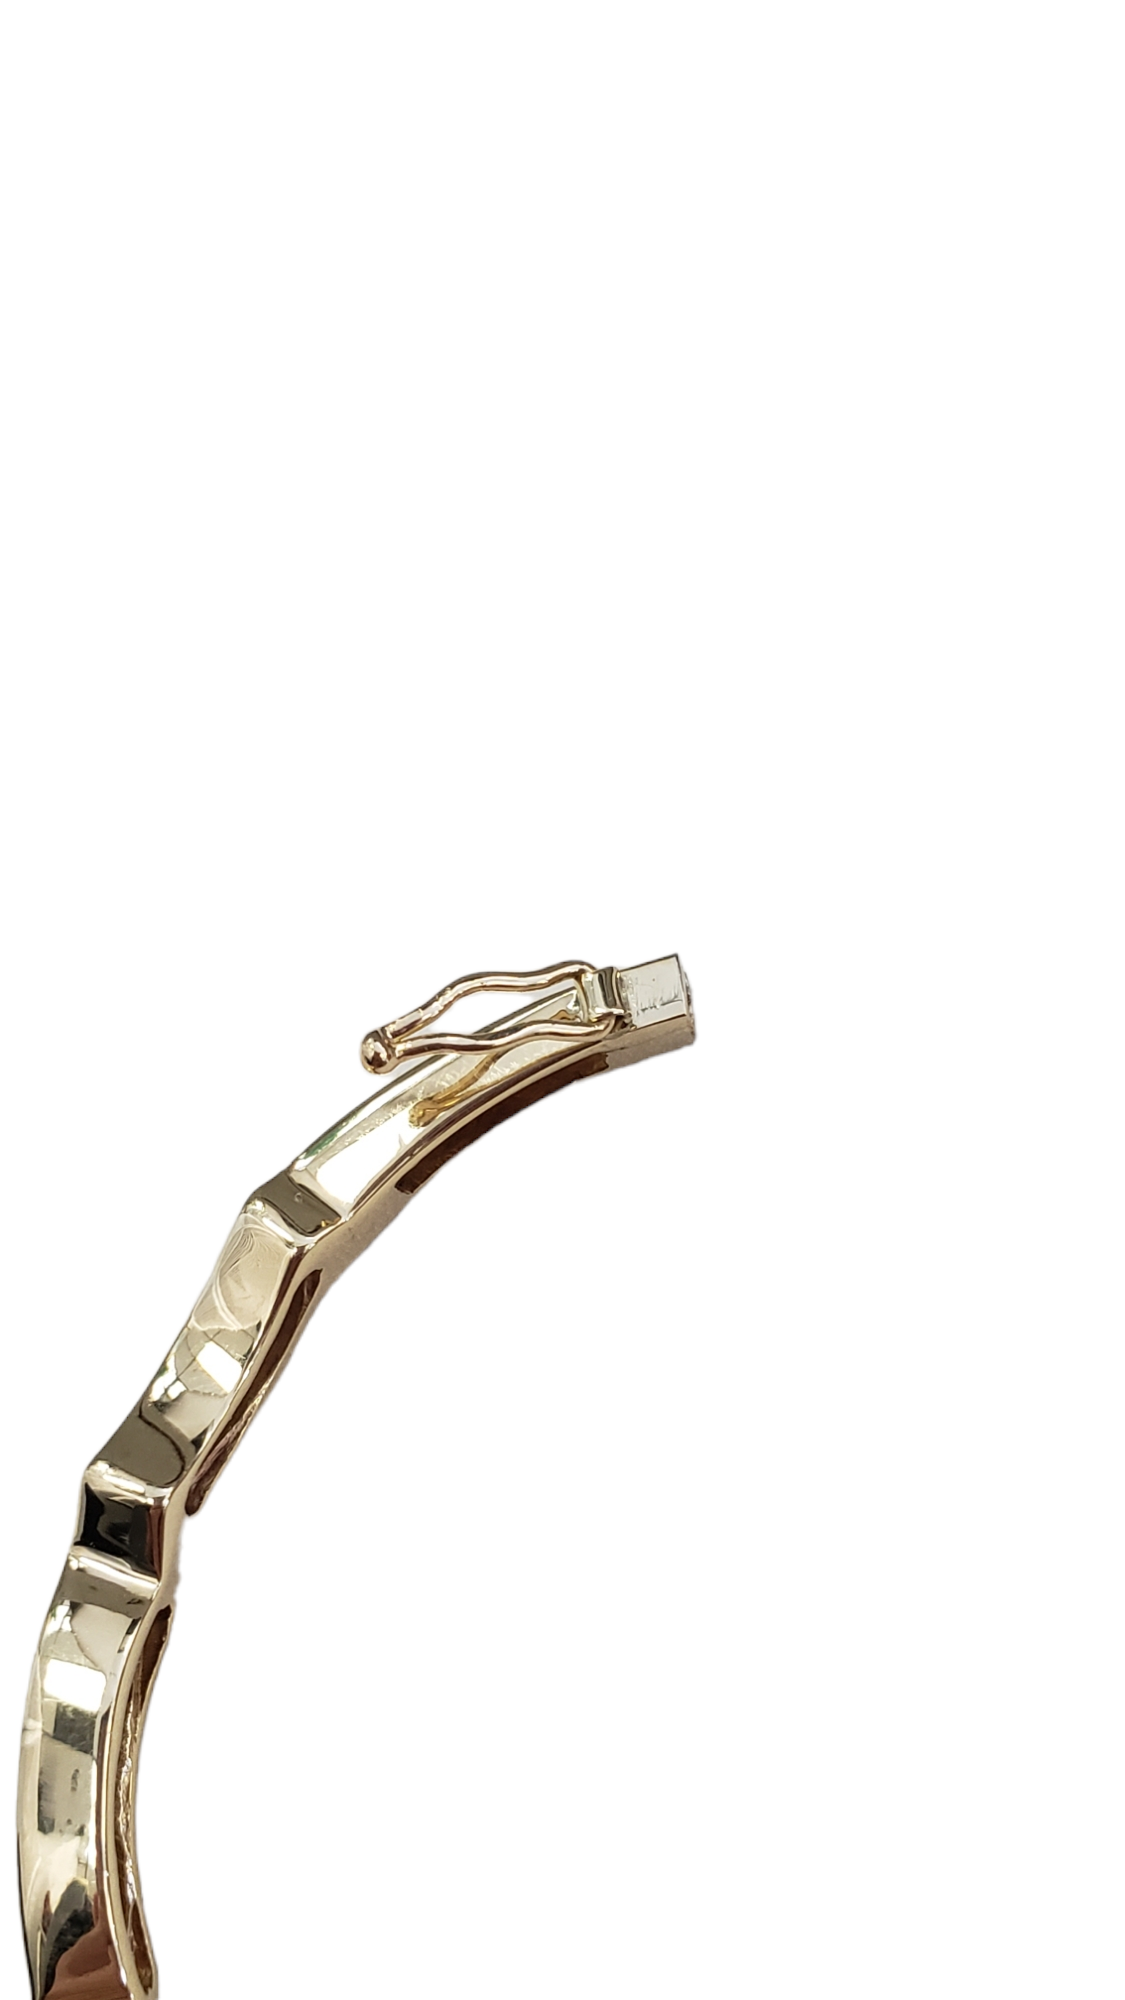 Diamond Channel Set Bangle Bracelet made in 14-Karat Yellow Gold